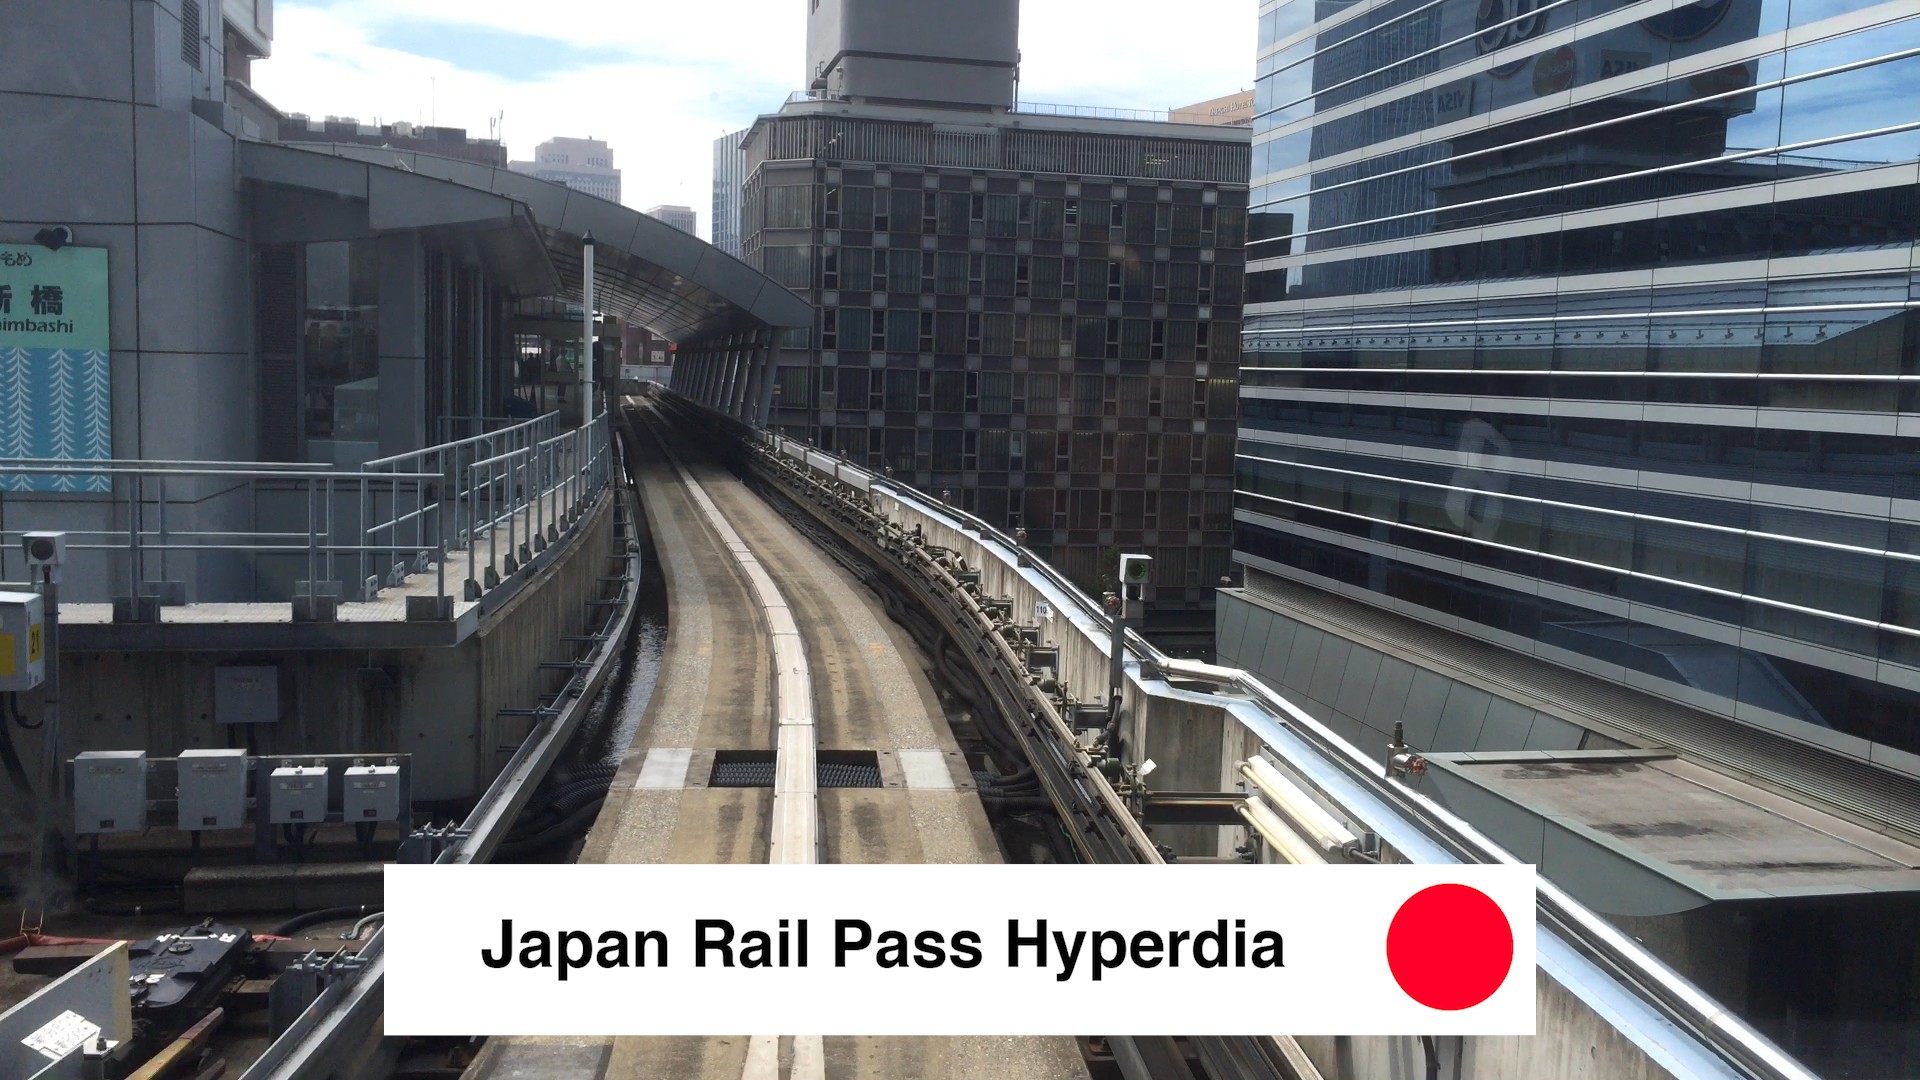 Japan Rail Hyperdia - Where To Buy Japan Rail Pass How To Use JR Pass In Tokyo. JR Pass Price